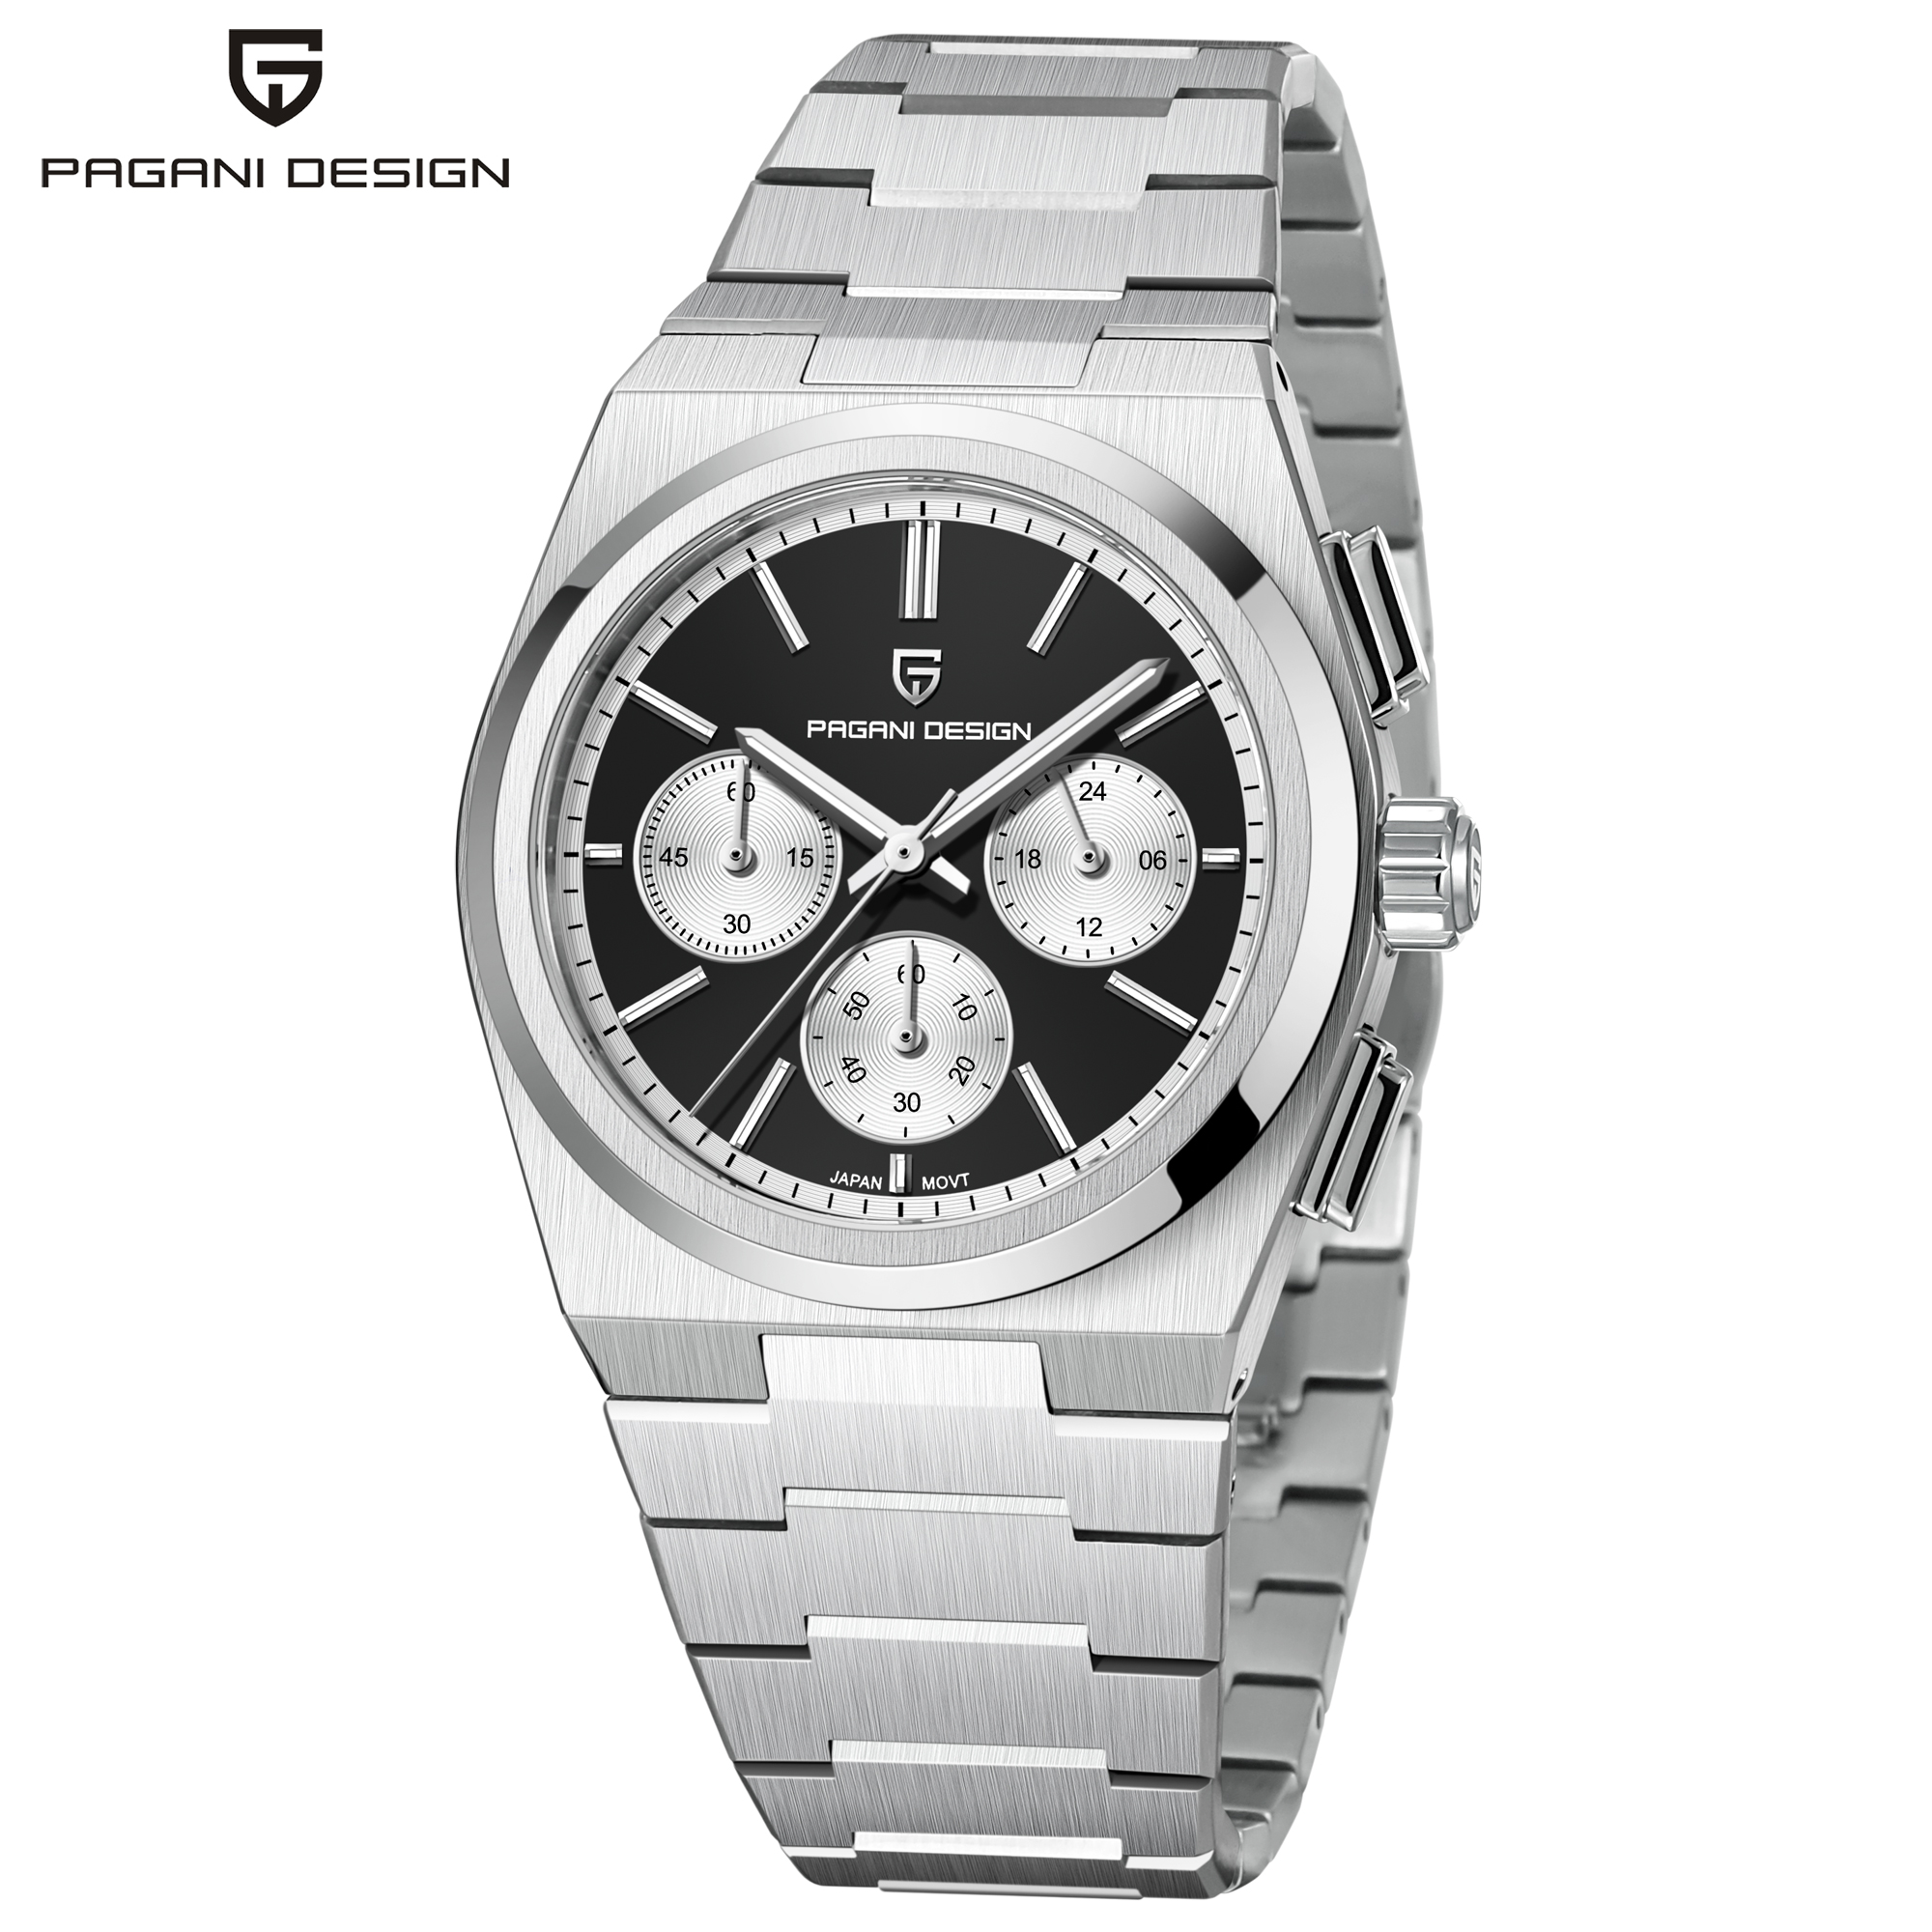 PAGANI DESIGN PD-1761 Men's Chronograph VK63 Quartz Watch